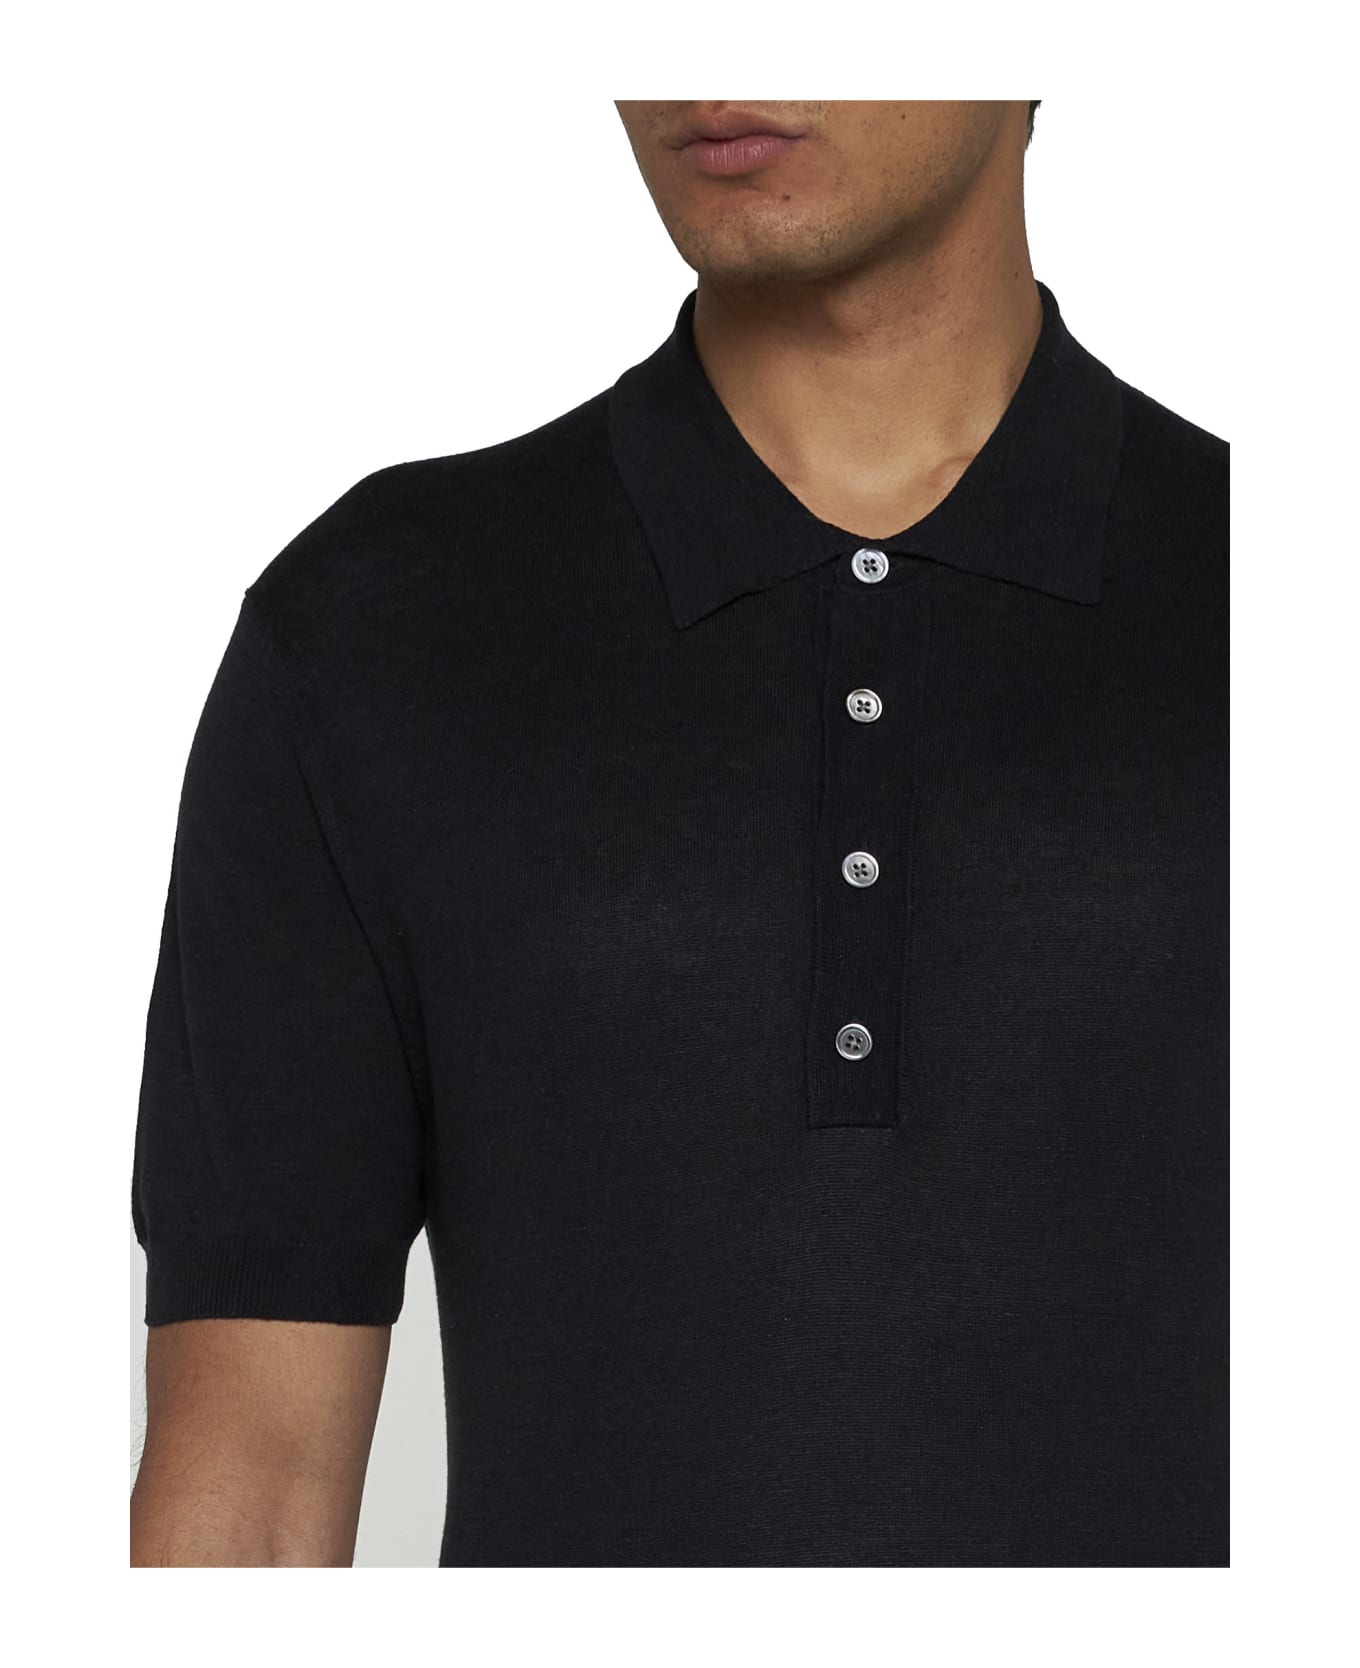 Low Brand Polo Shirt - Jet black ポロシャツ